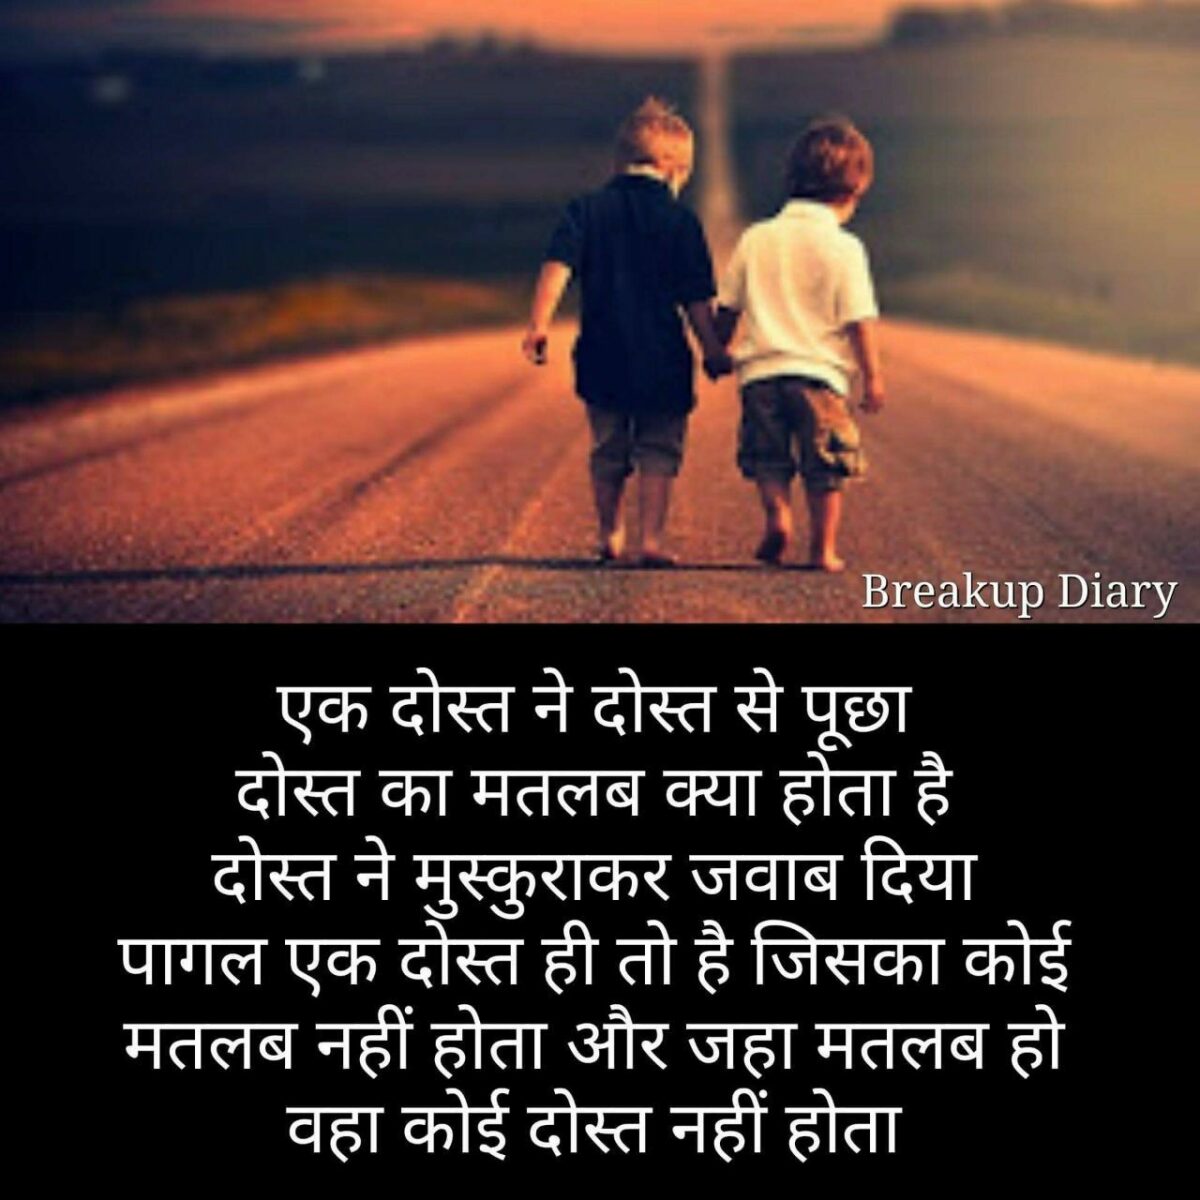 Broken friendship quotes in hindi